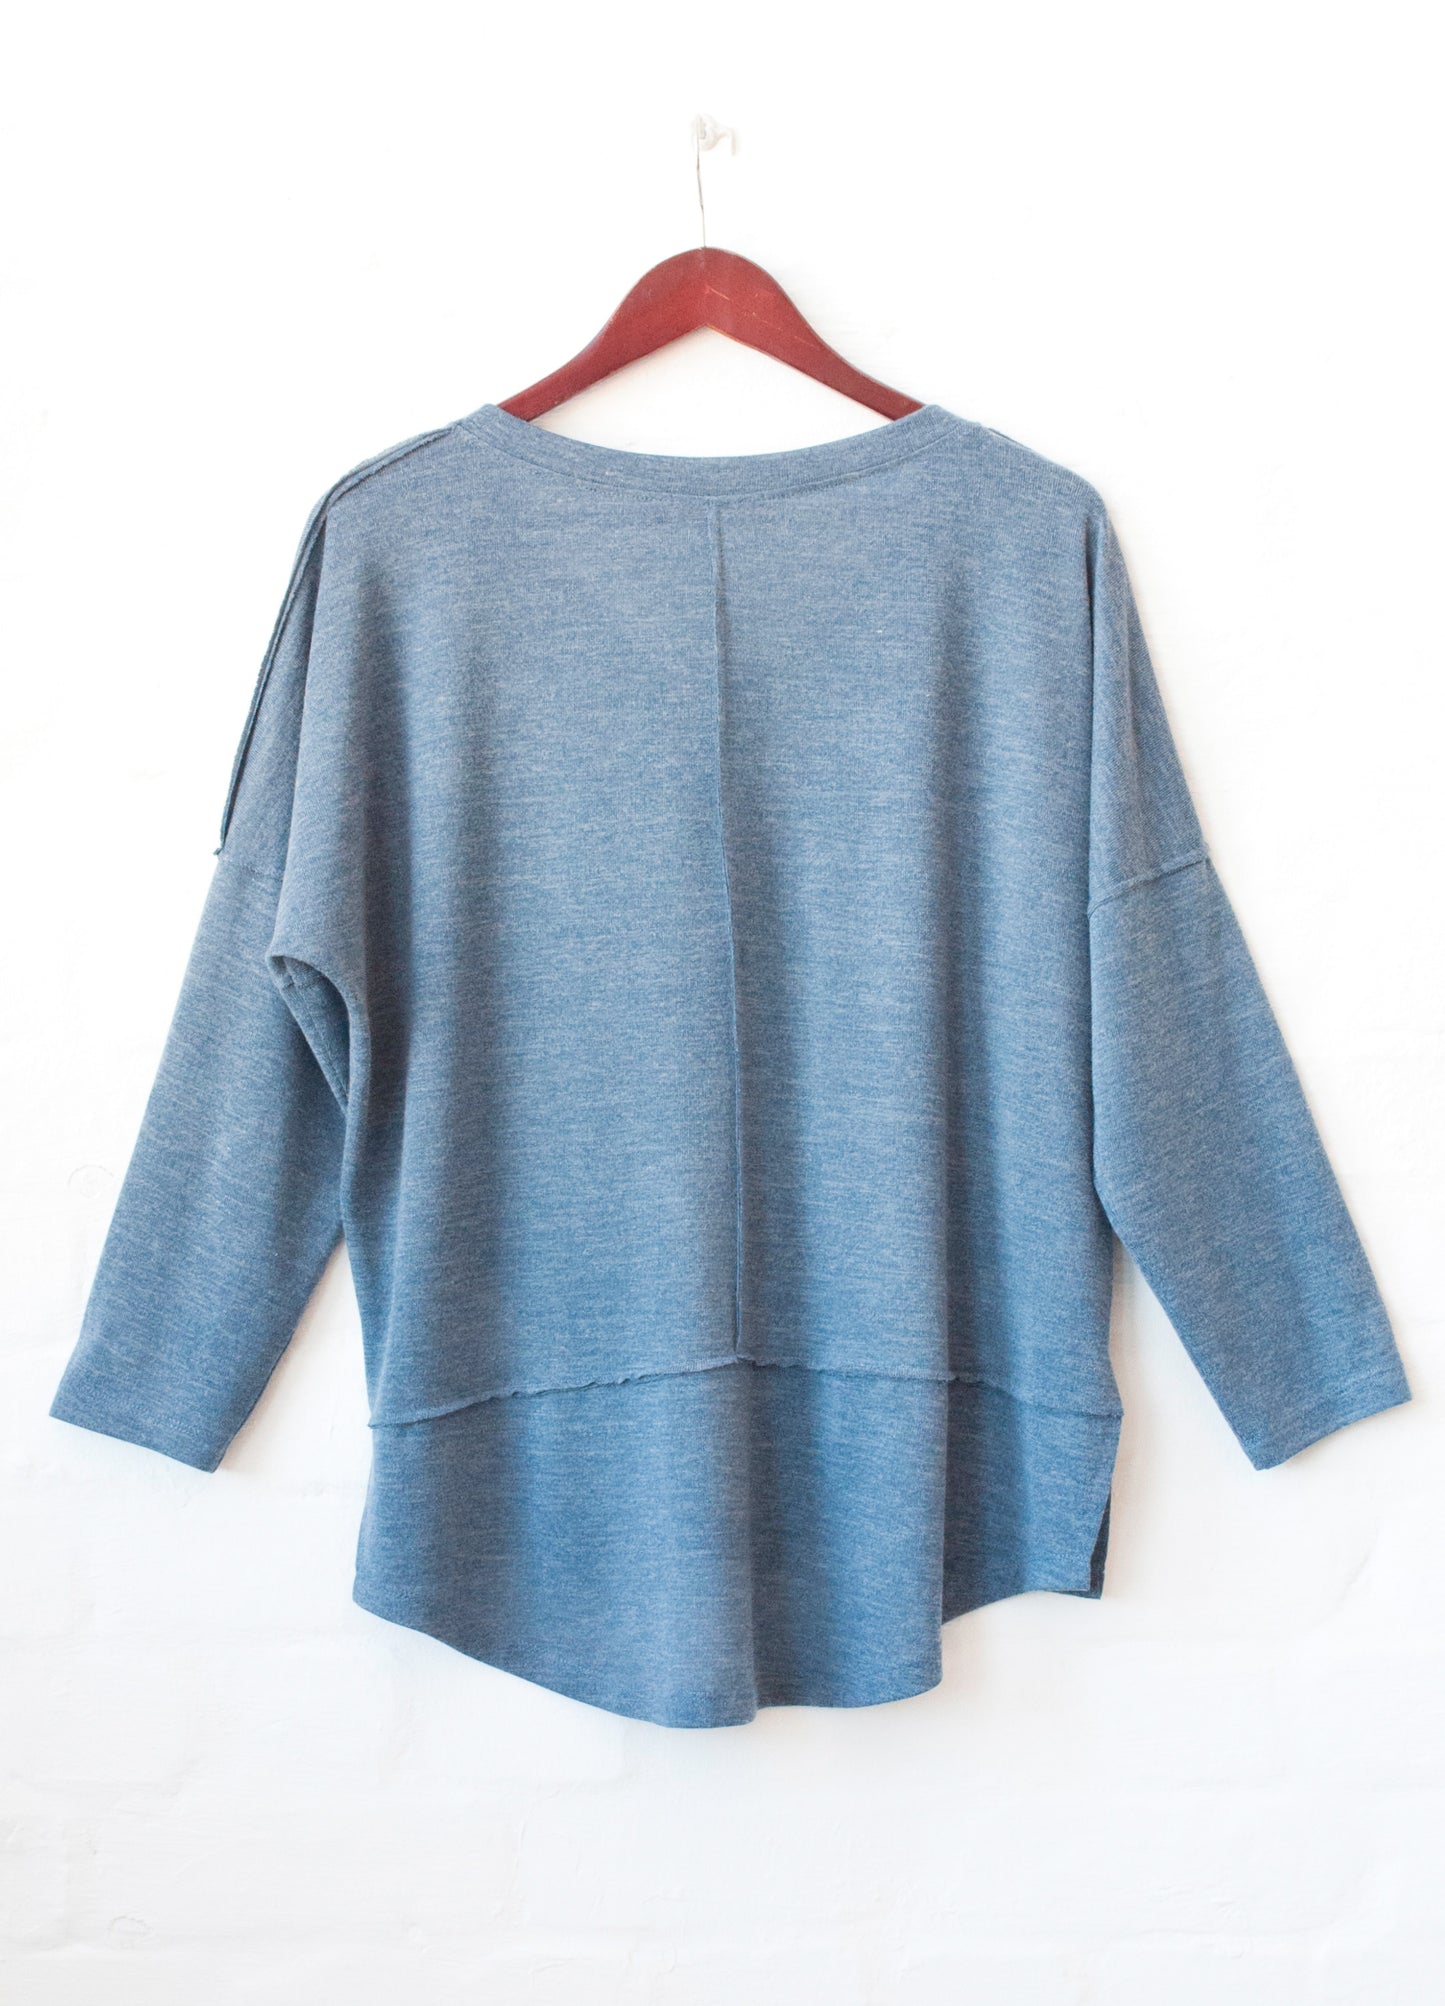 Mia Box Pullover in Indigo melange cut & sew knit size 34 left